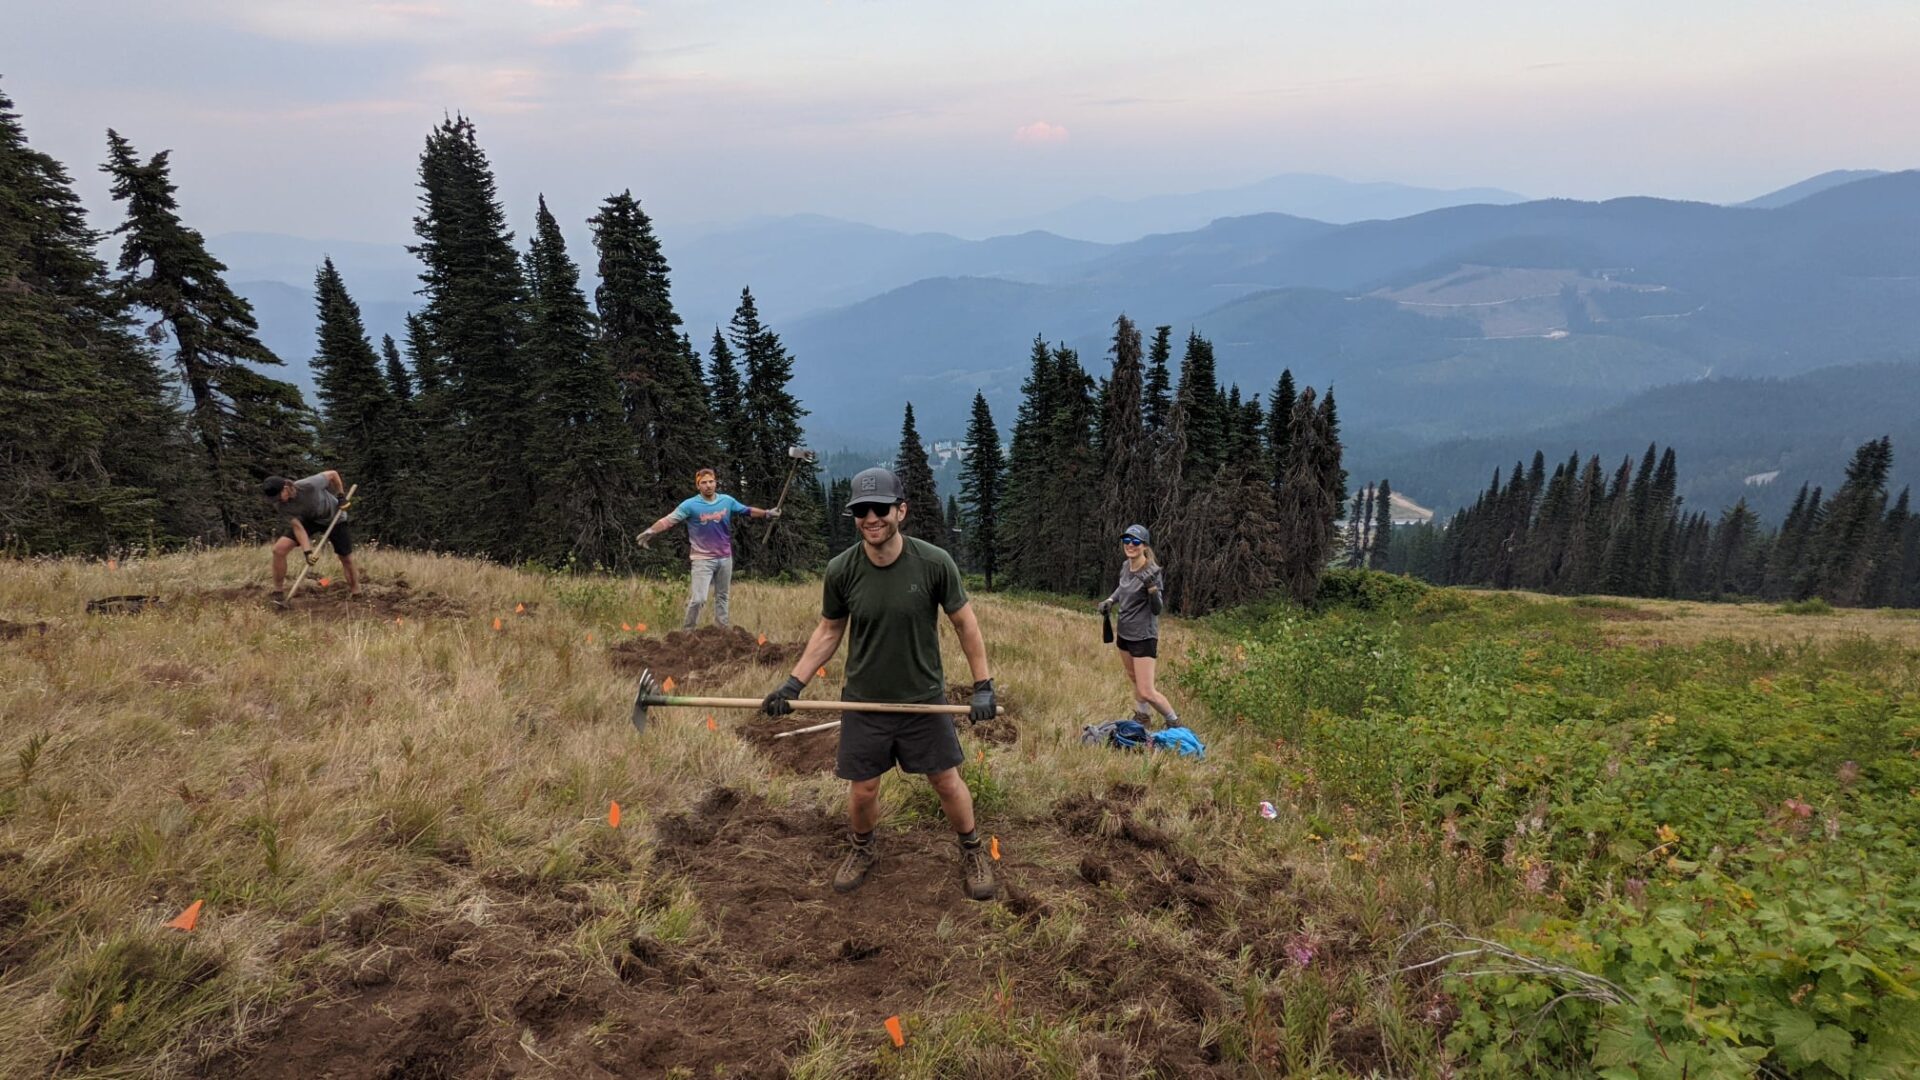 Trail building volunteers holding pulaski tools as they work at Mount Spokane.